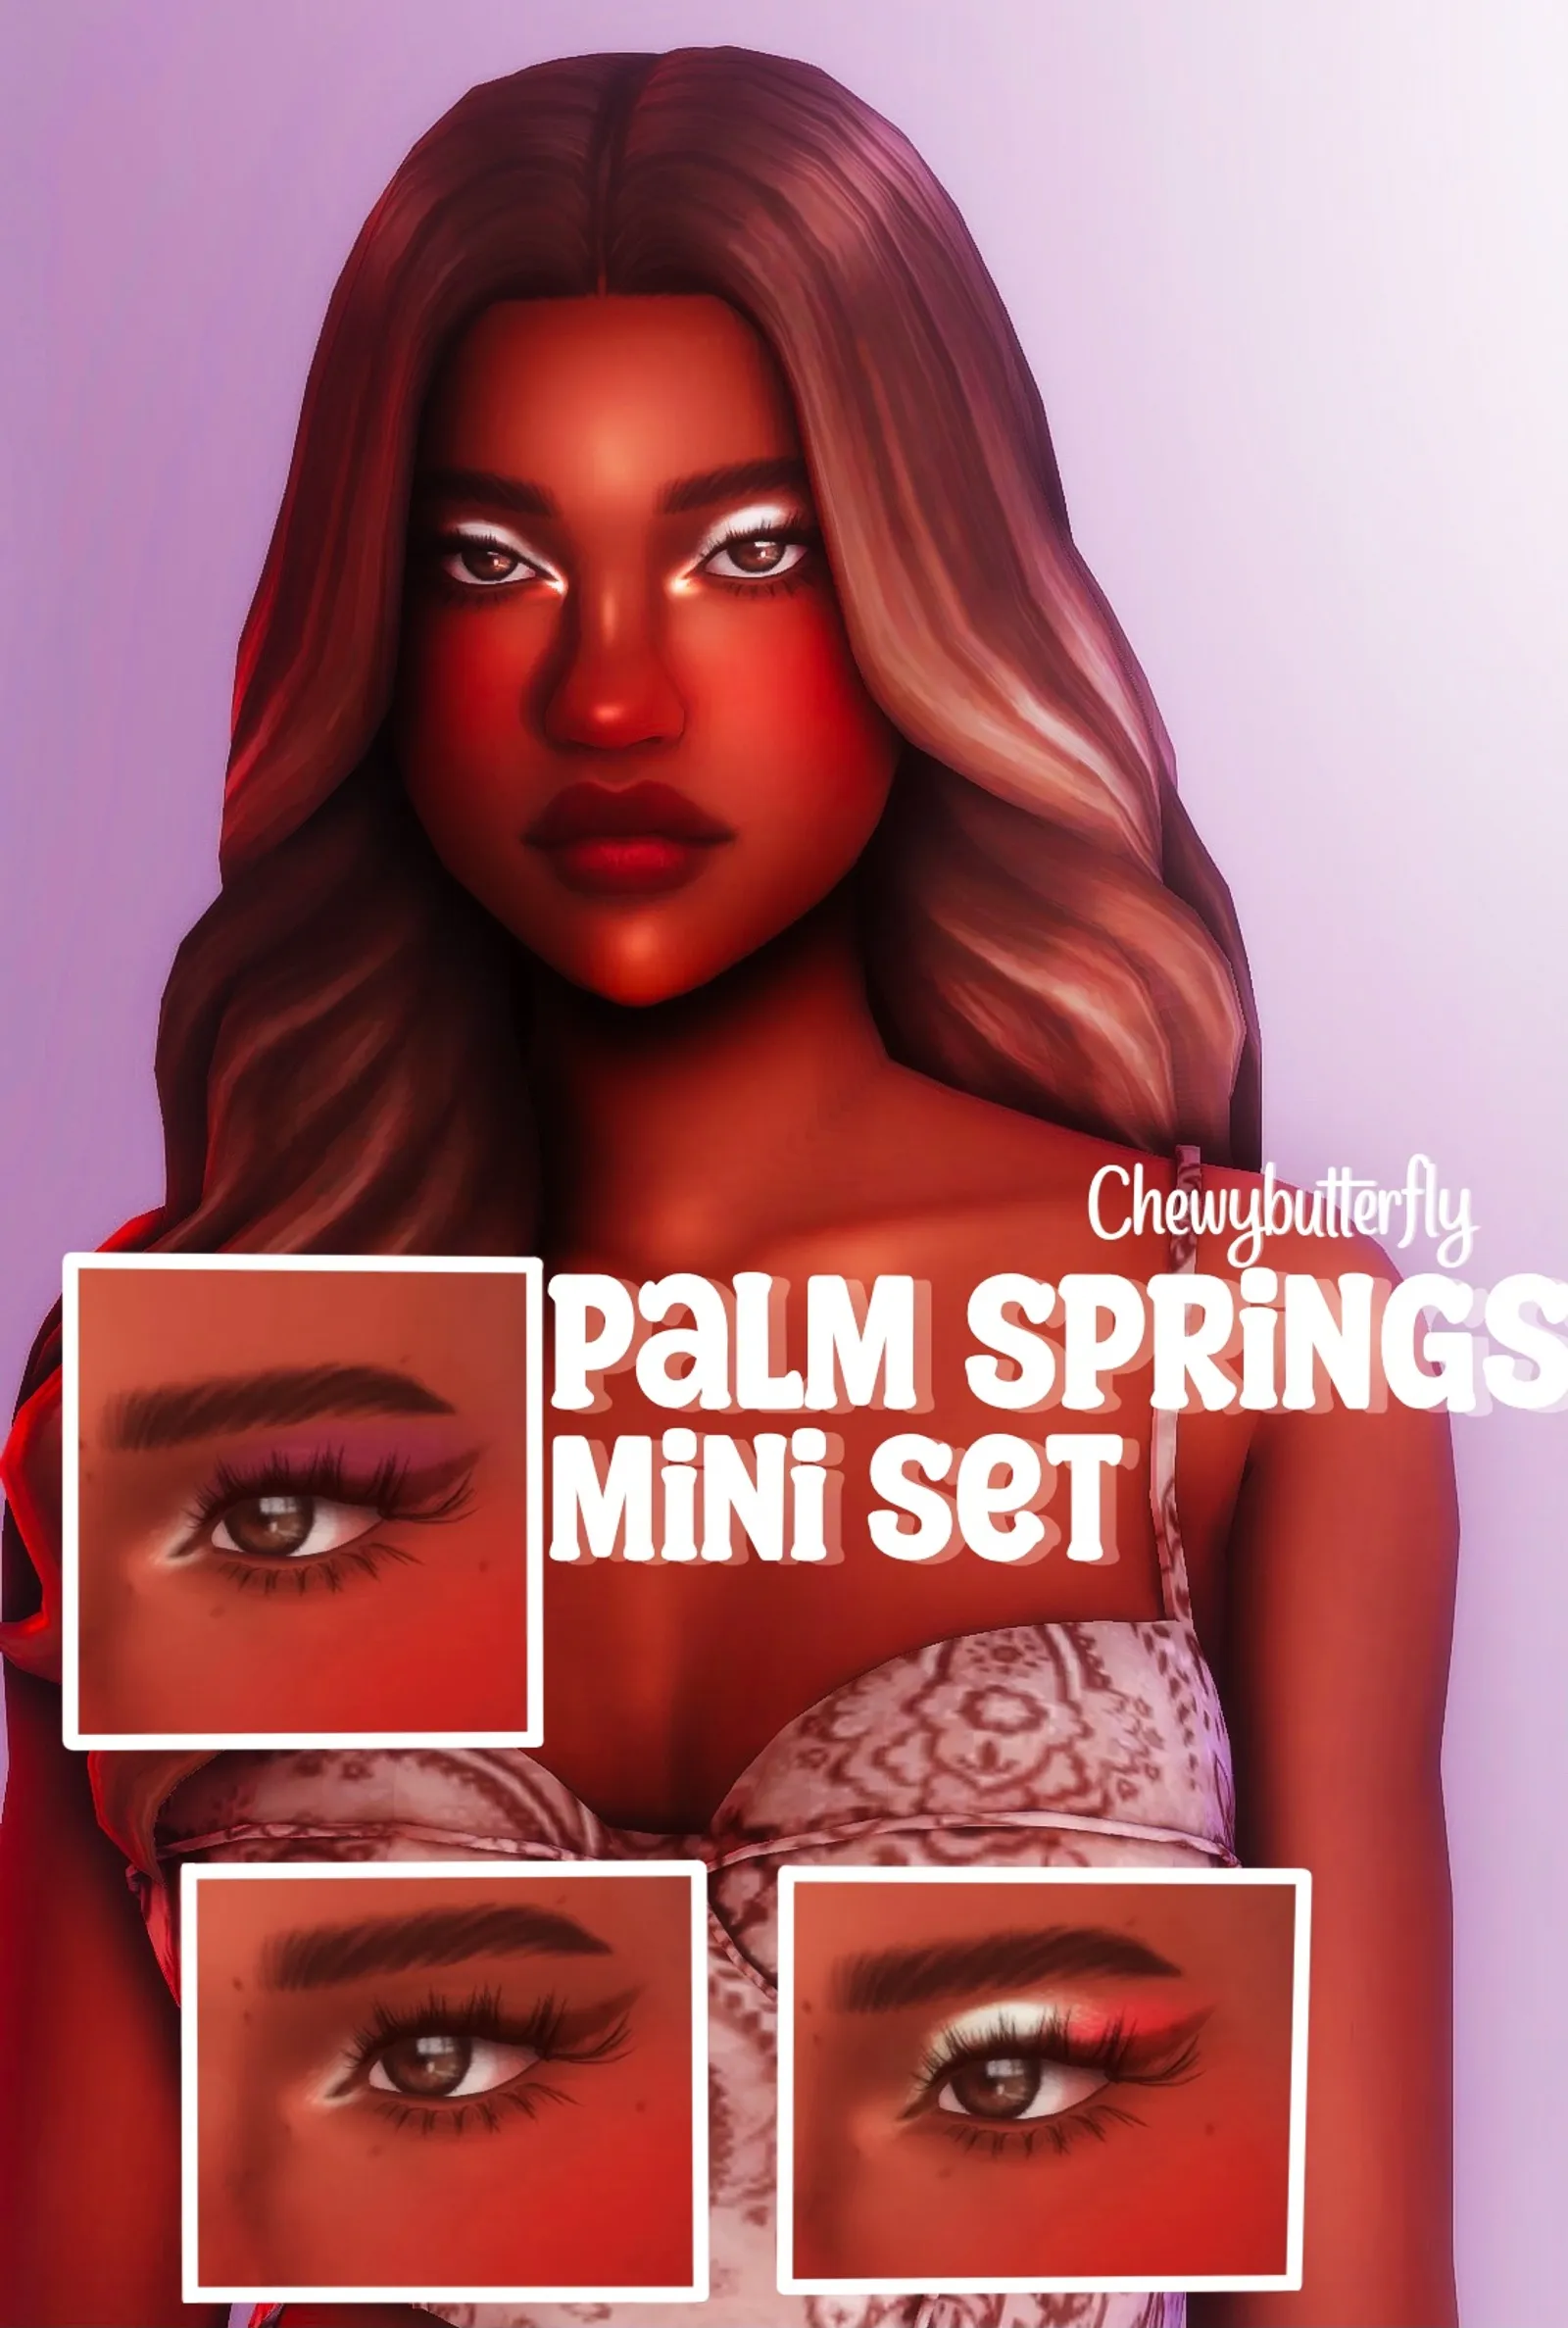 Palm springs mini set ?